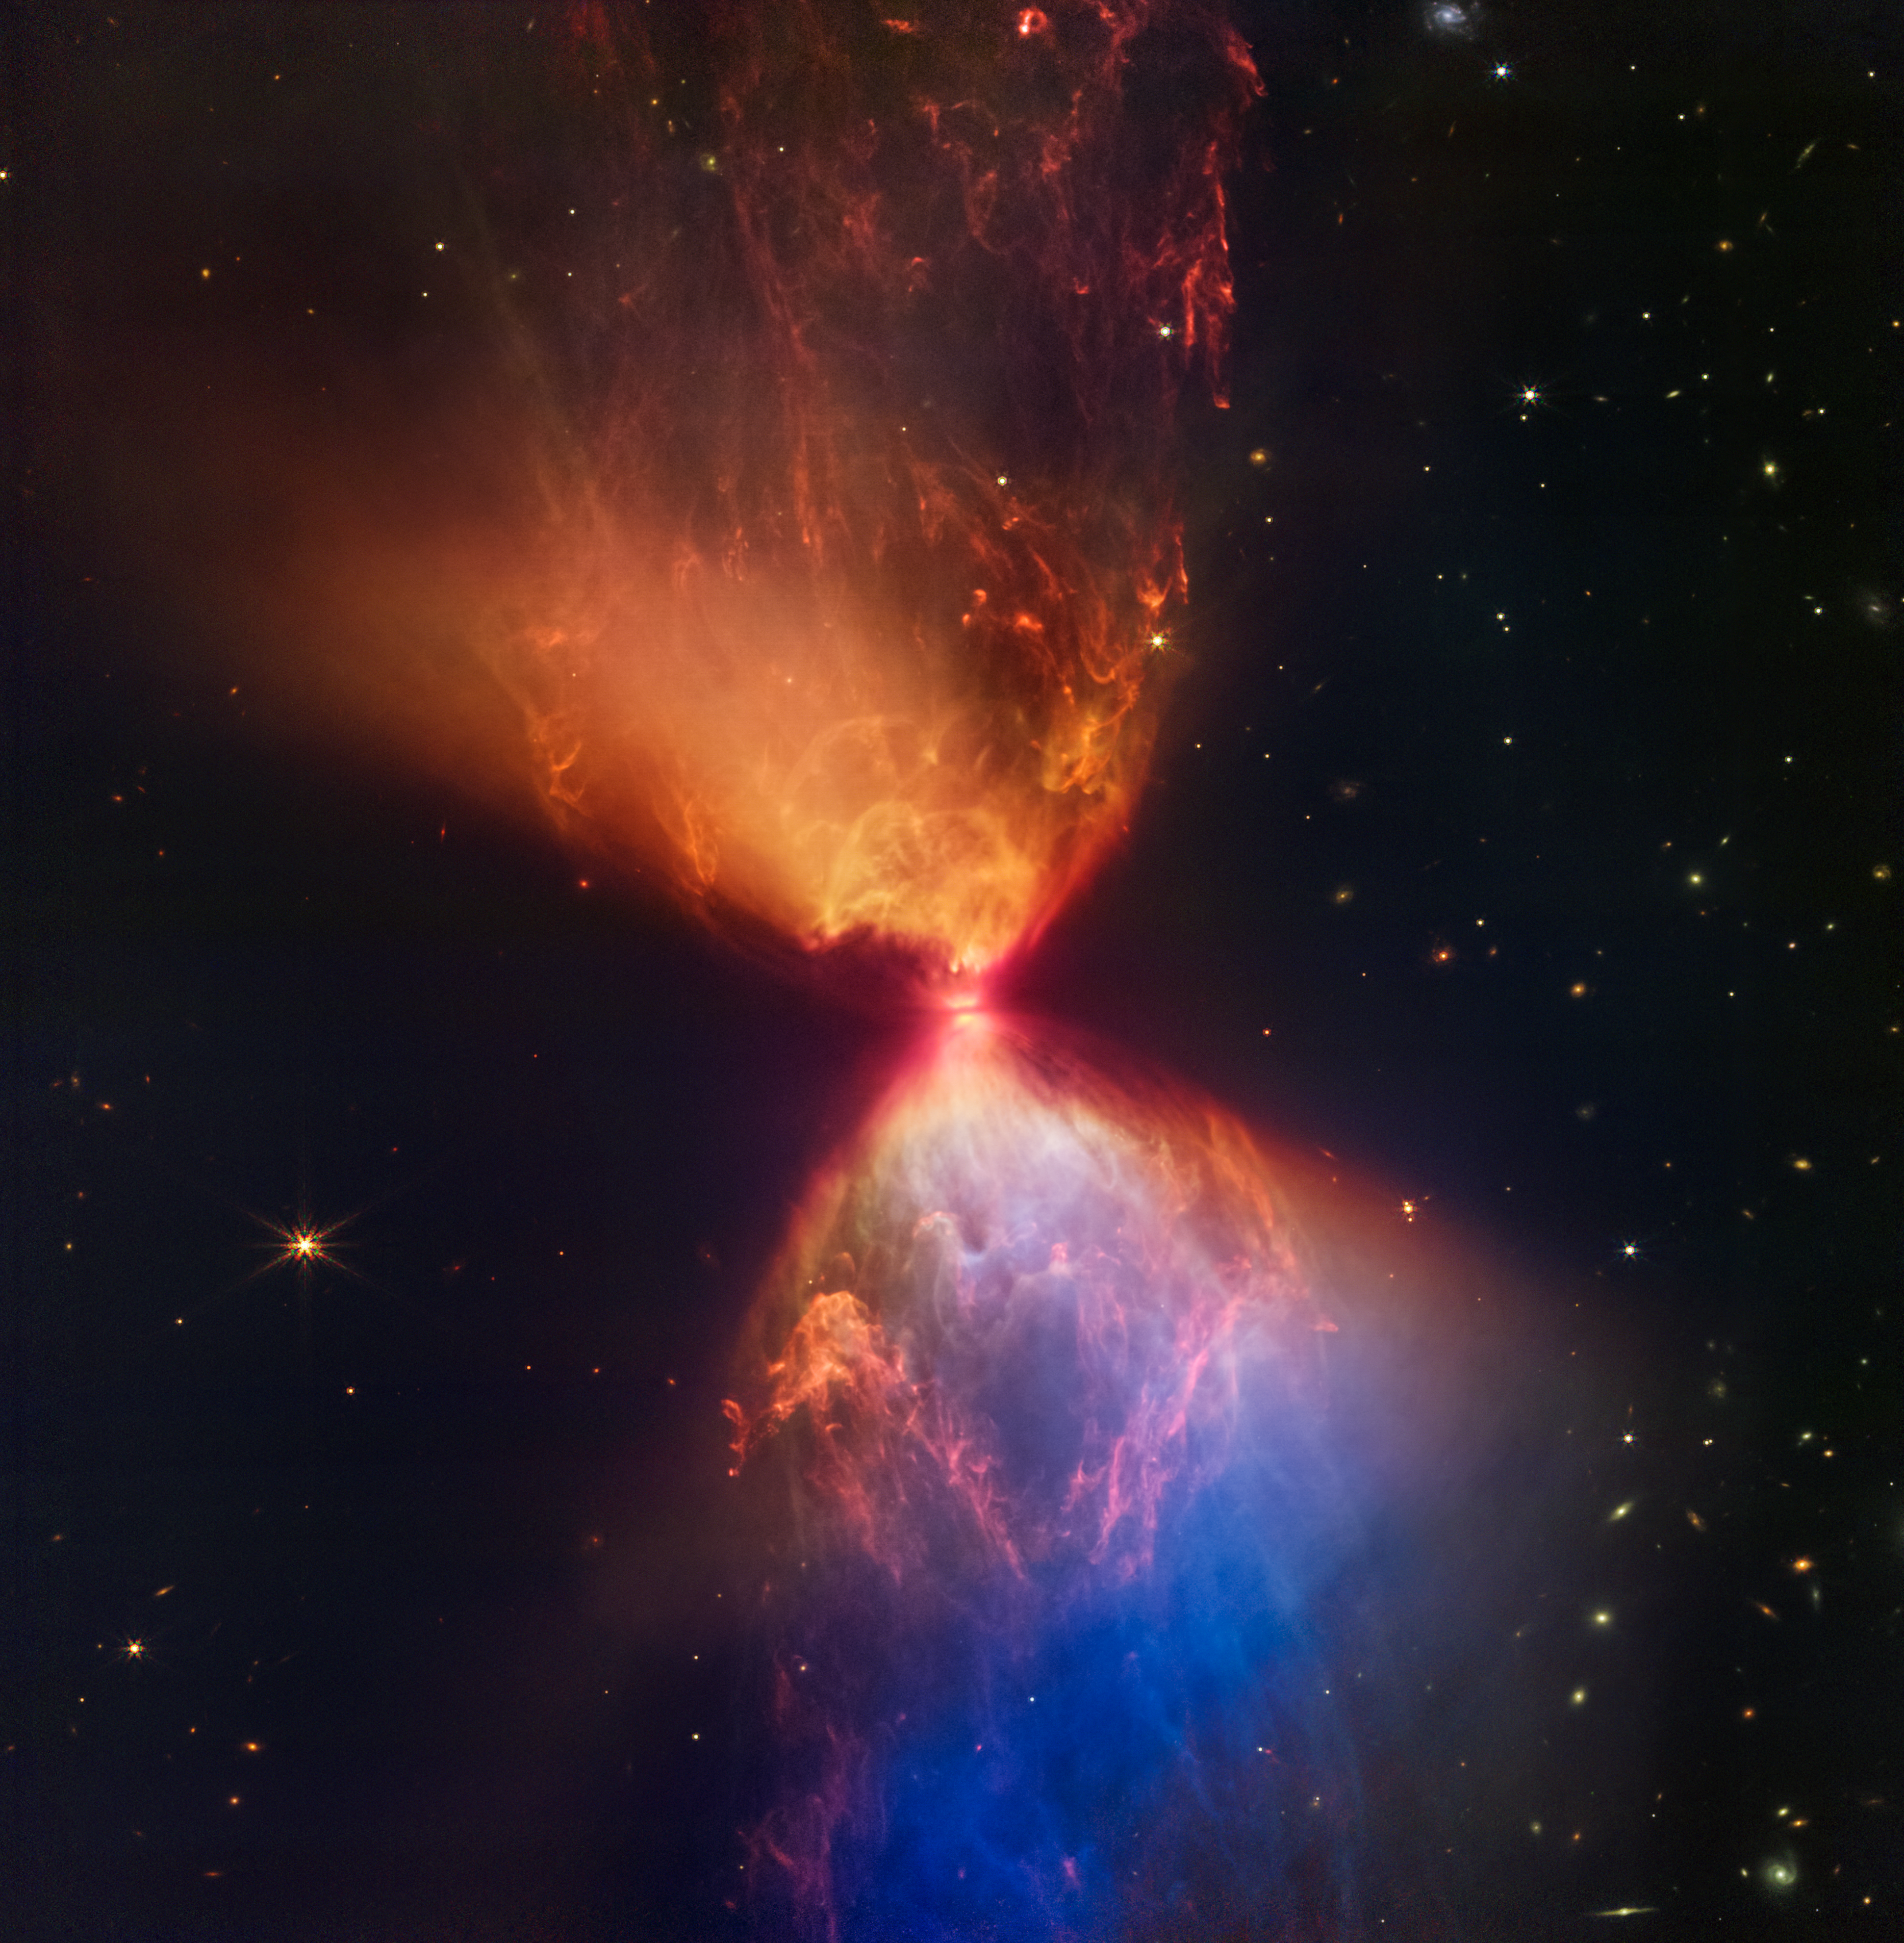 James Webb Space Telescope Space Stars Galaxy L1527 IRS Protostar 3883x3962